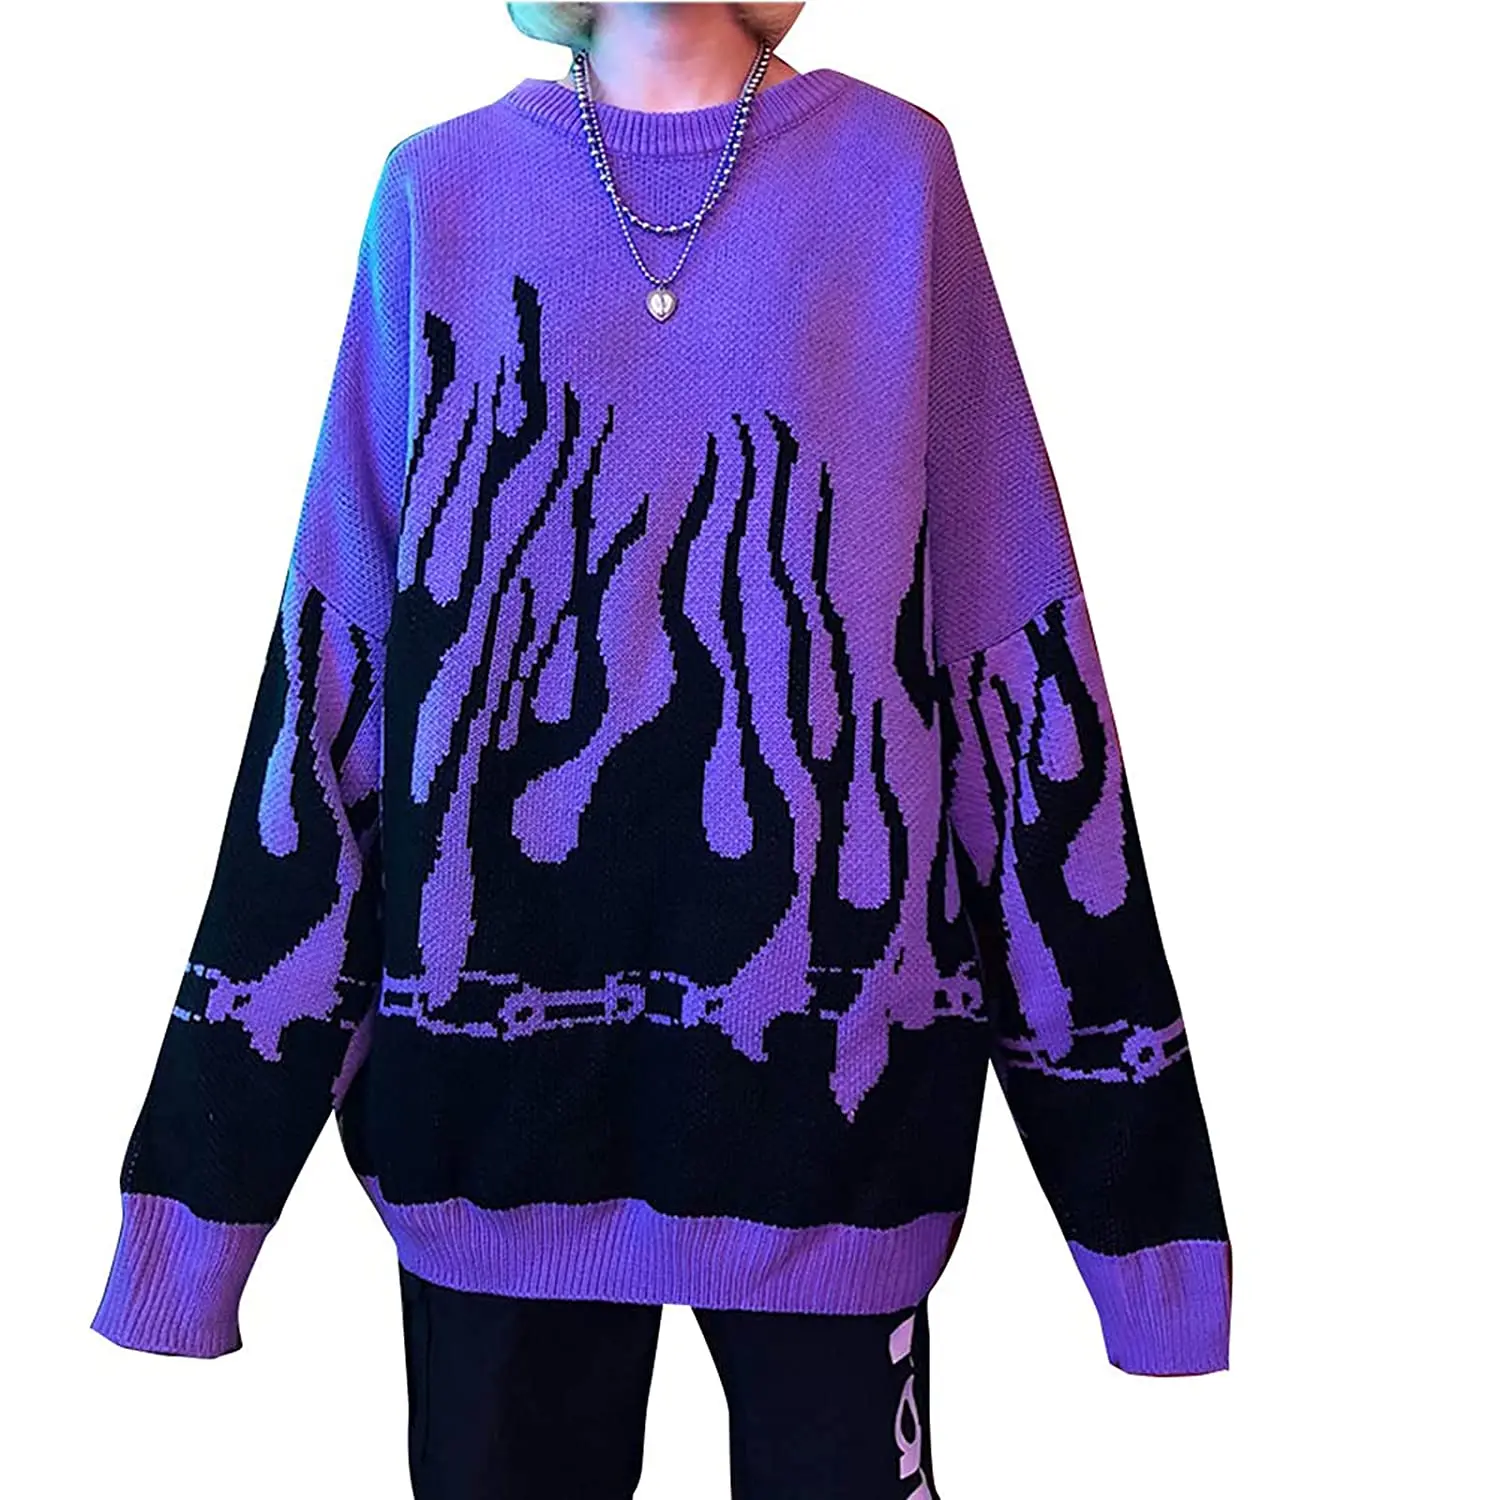 Purple and Black flame sweater #Brandnew #Purple